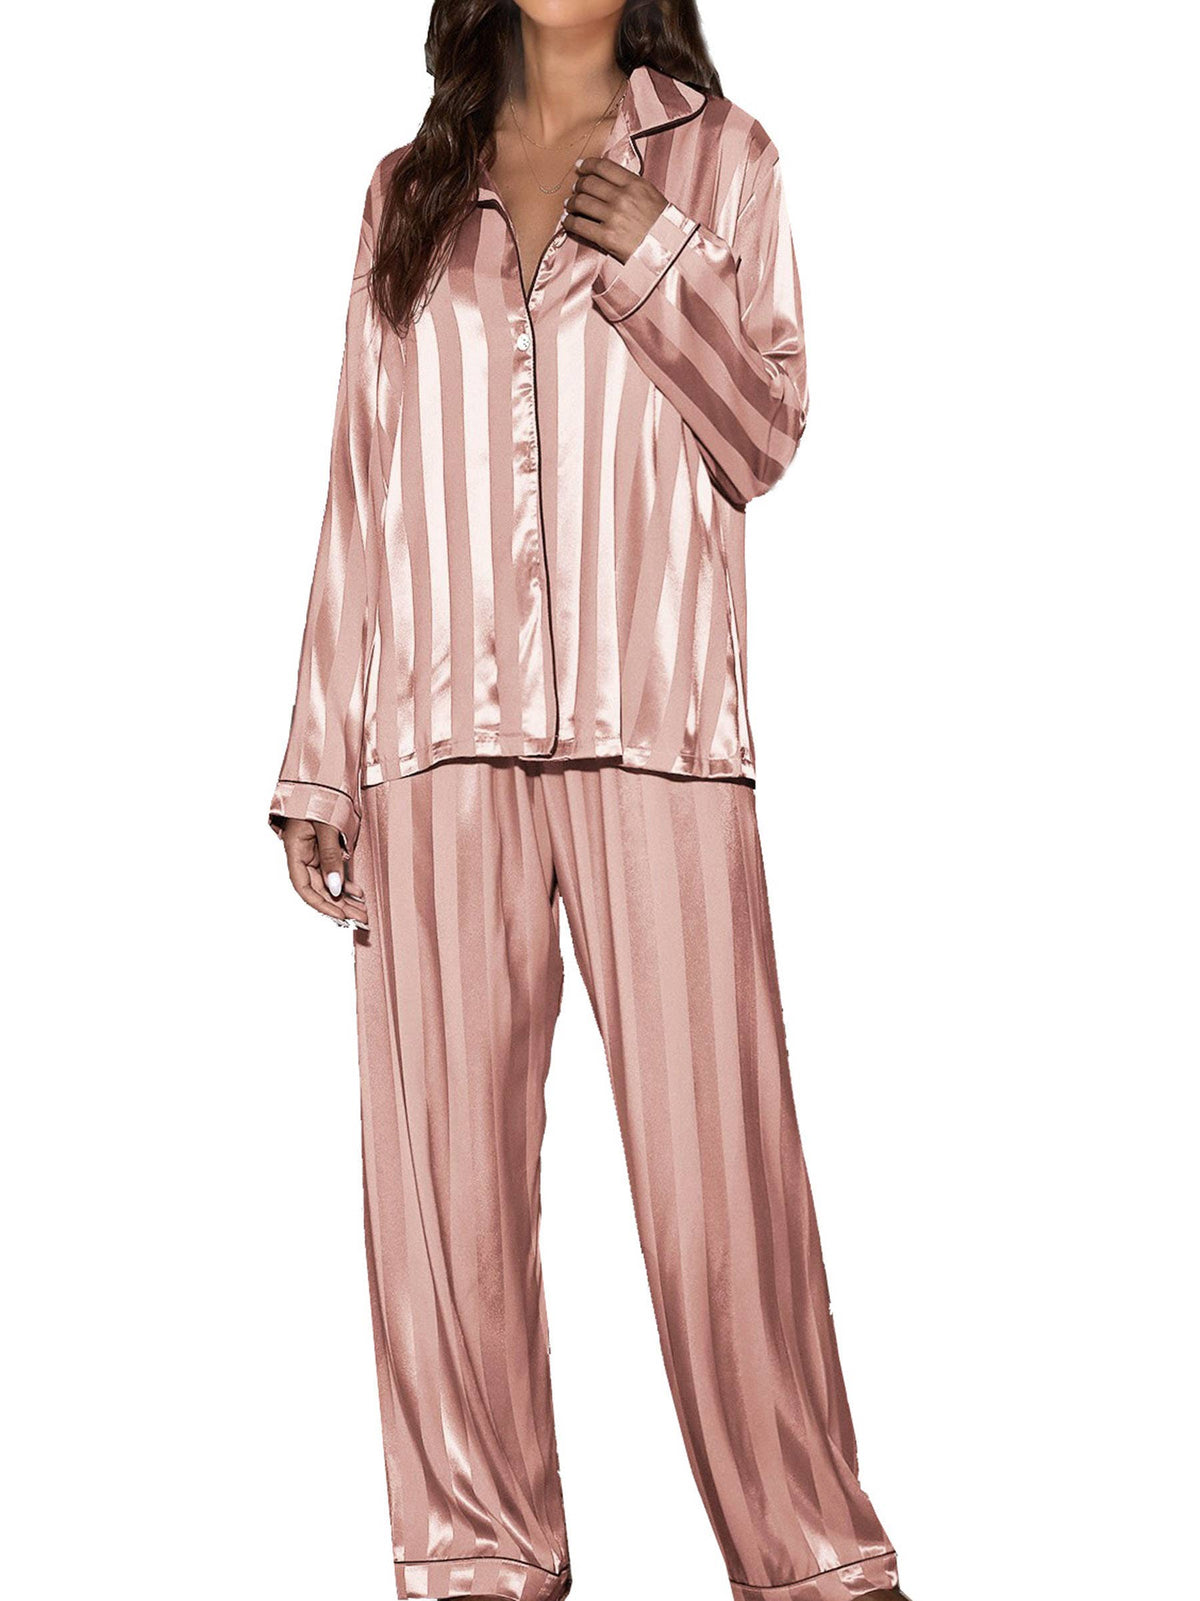 2 Piece Button Front Sleepwear Pants Set Loungewear: M / Pink